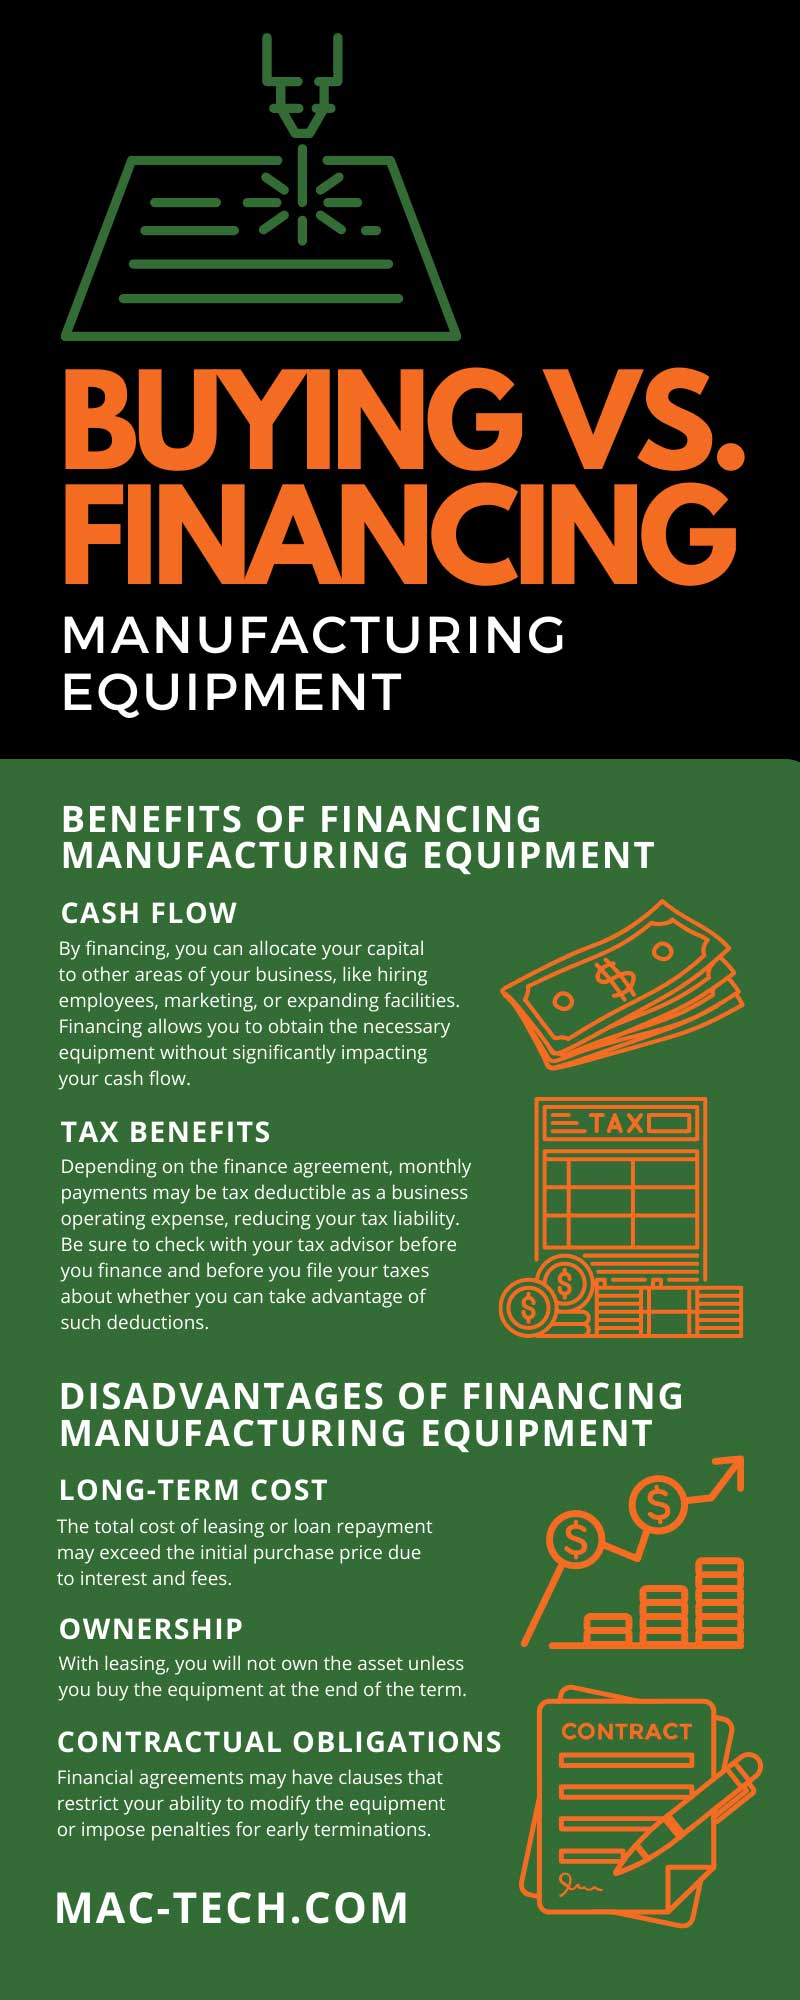 Buying vs. Financing Manufacturing Equipment